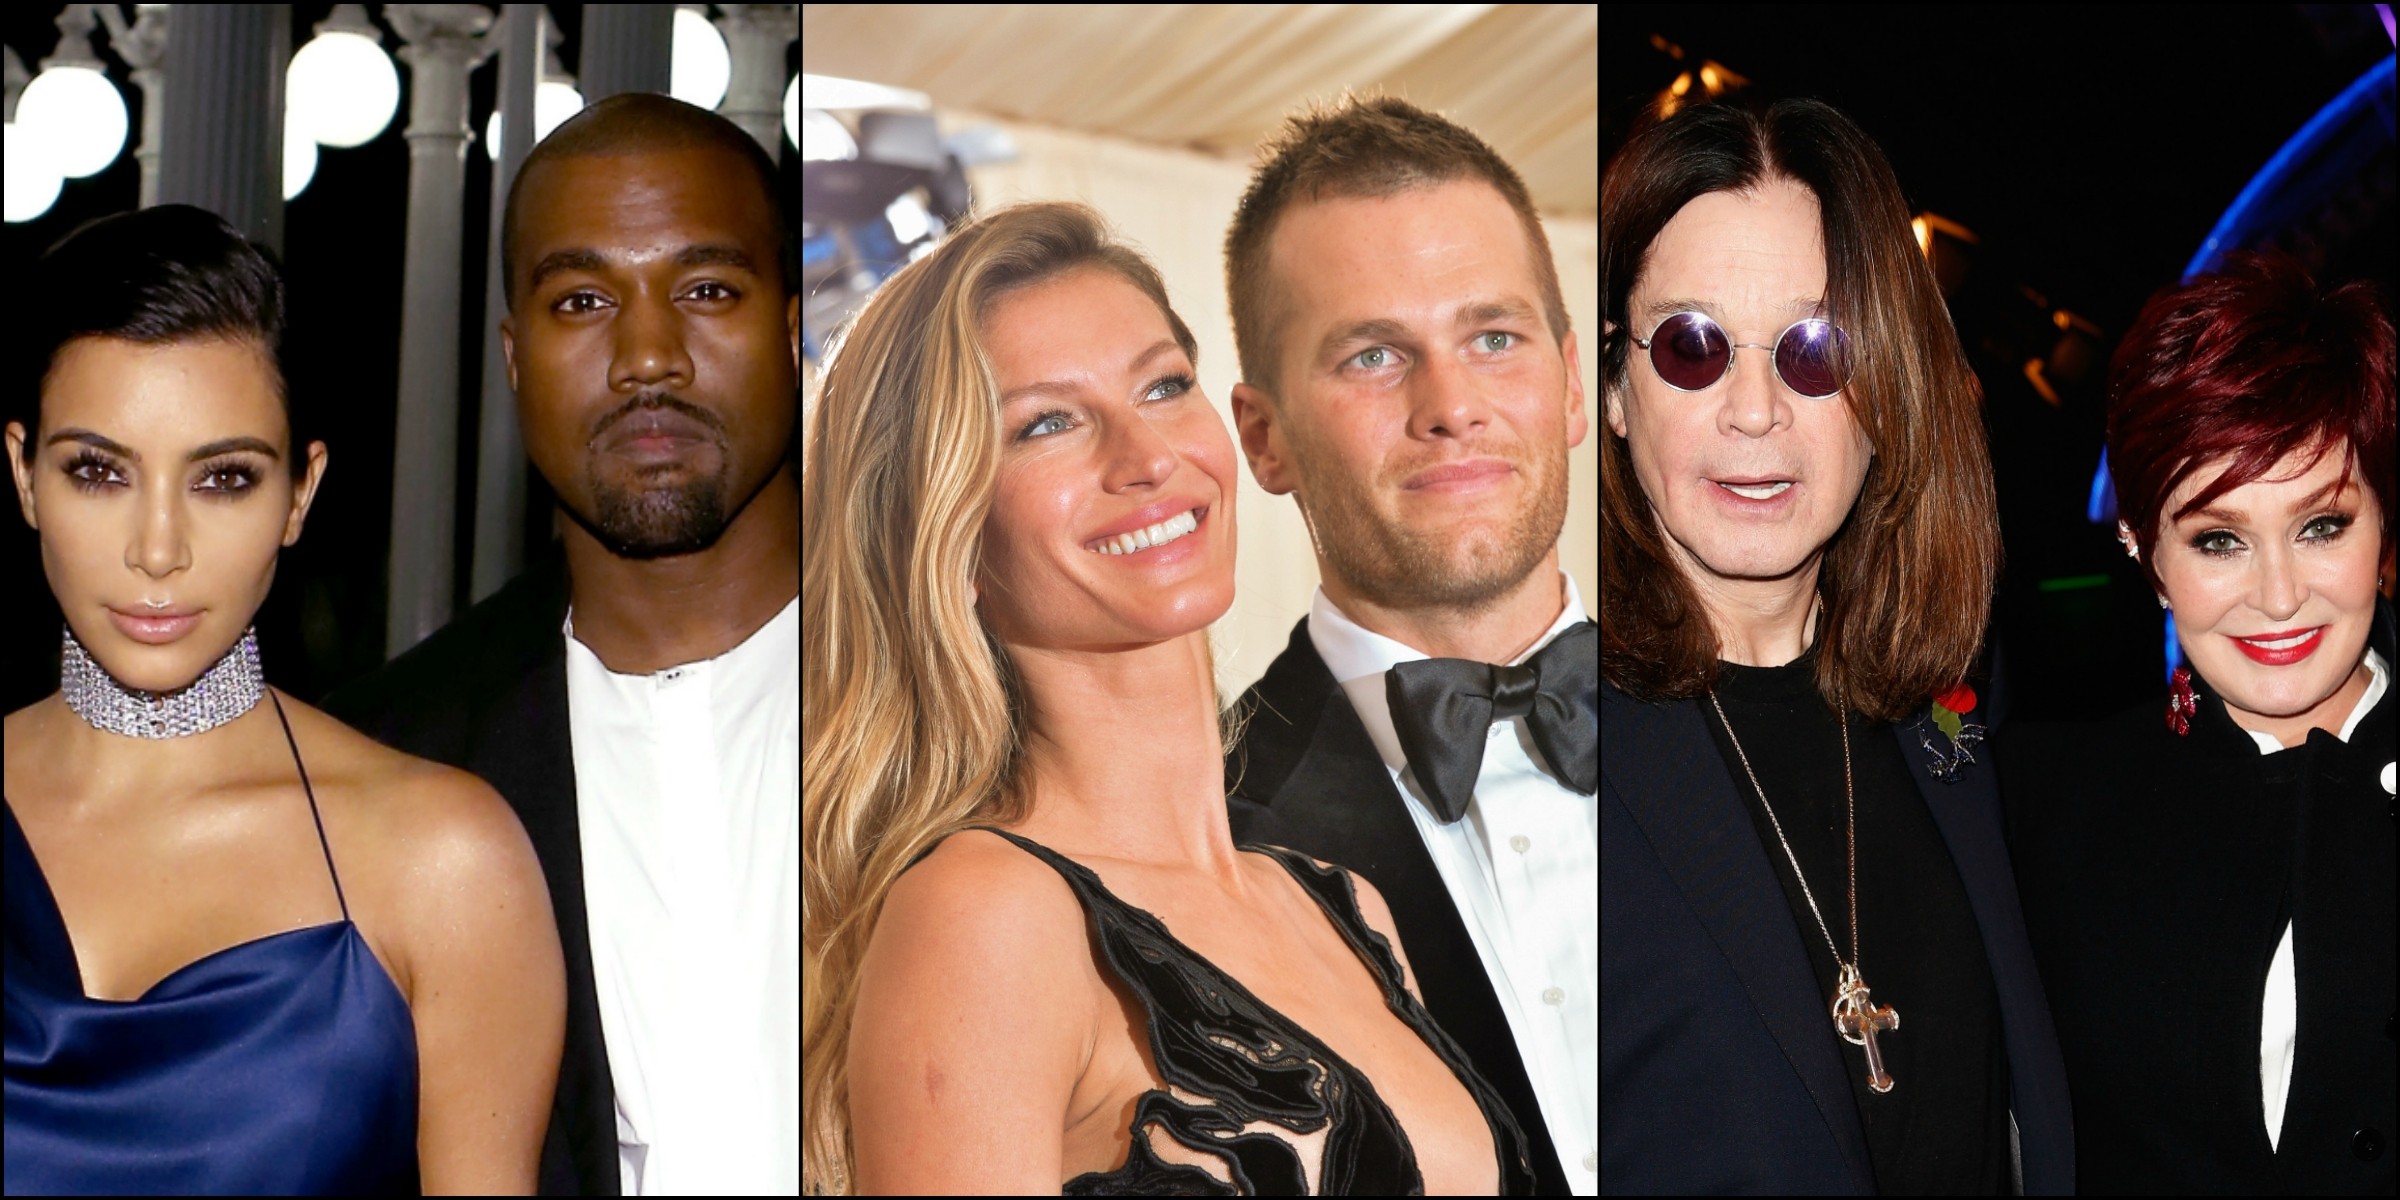 Kim Kardashian com Kanye West (à esq.), Gisele Bündchen com Tom Brady (centro), e Ozzy com Sharon Osbourne. (Foto: Getty Images)